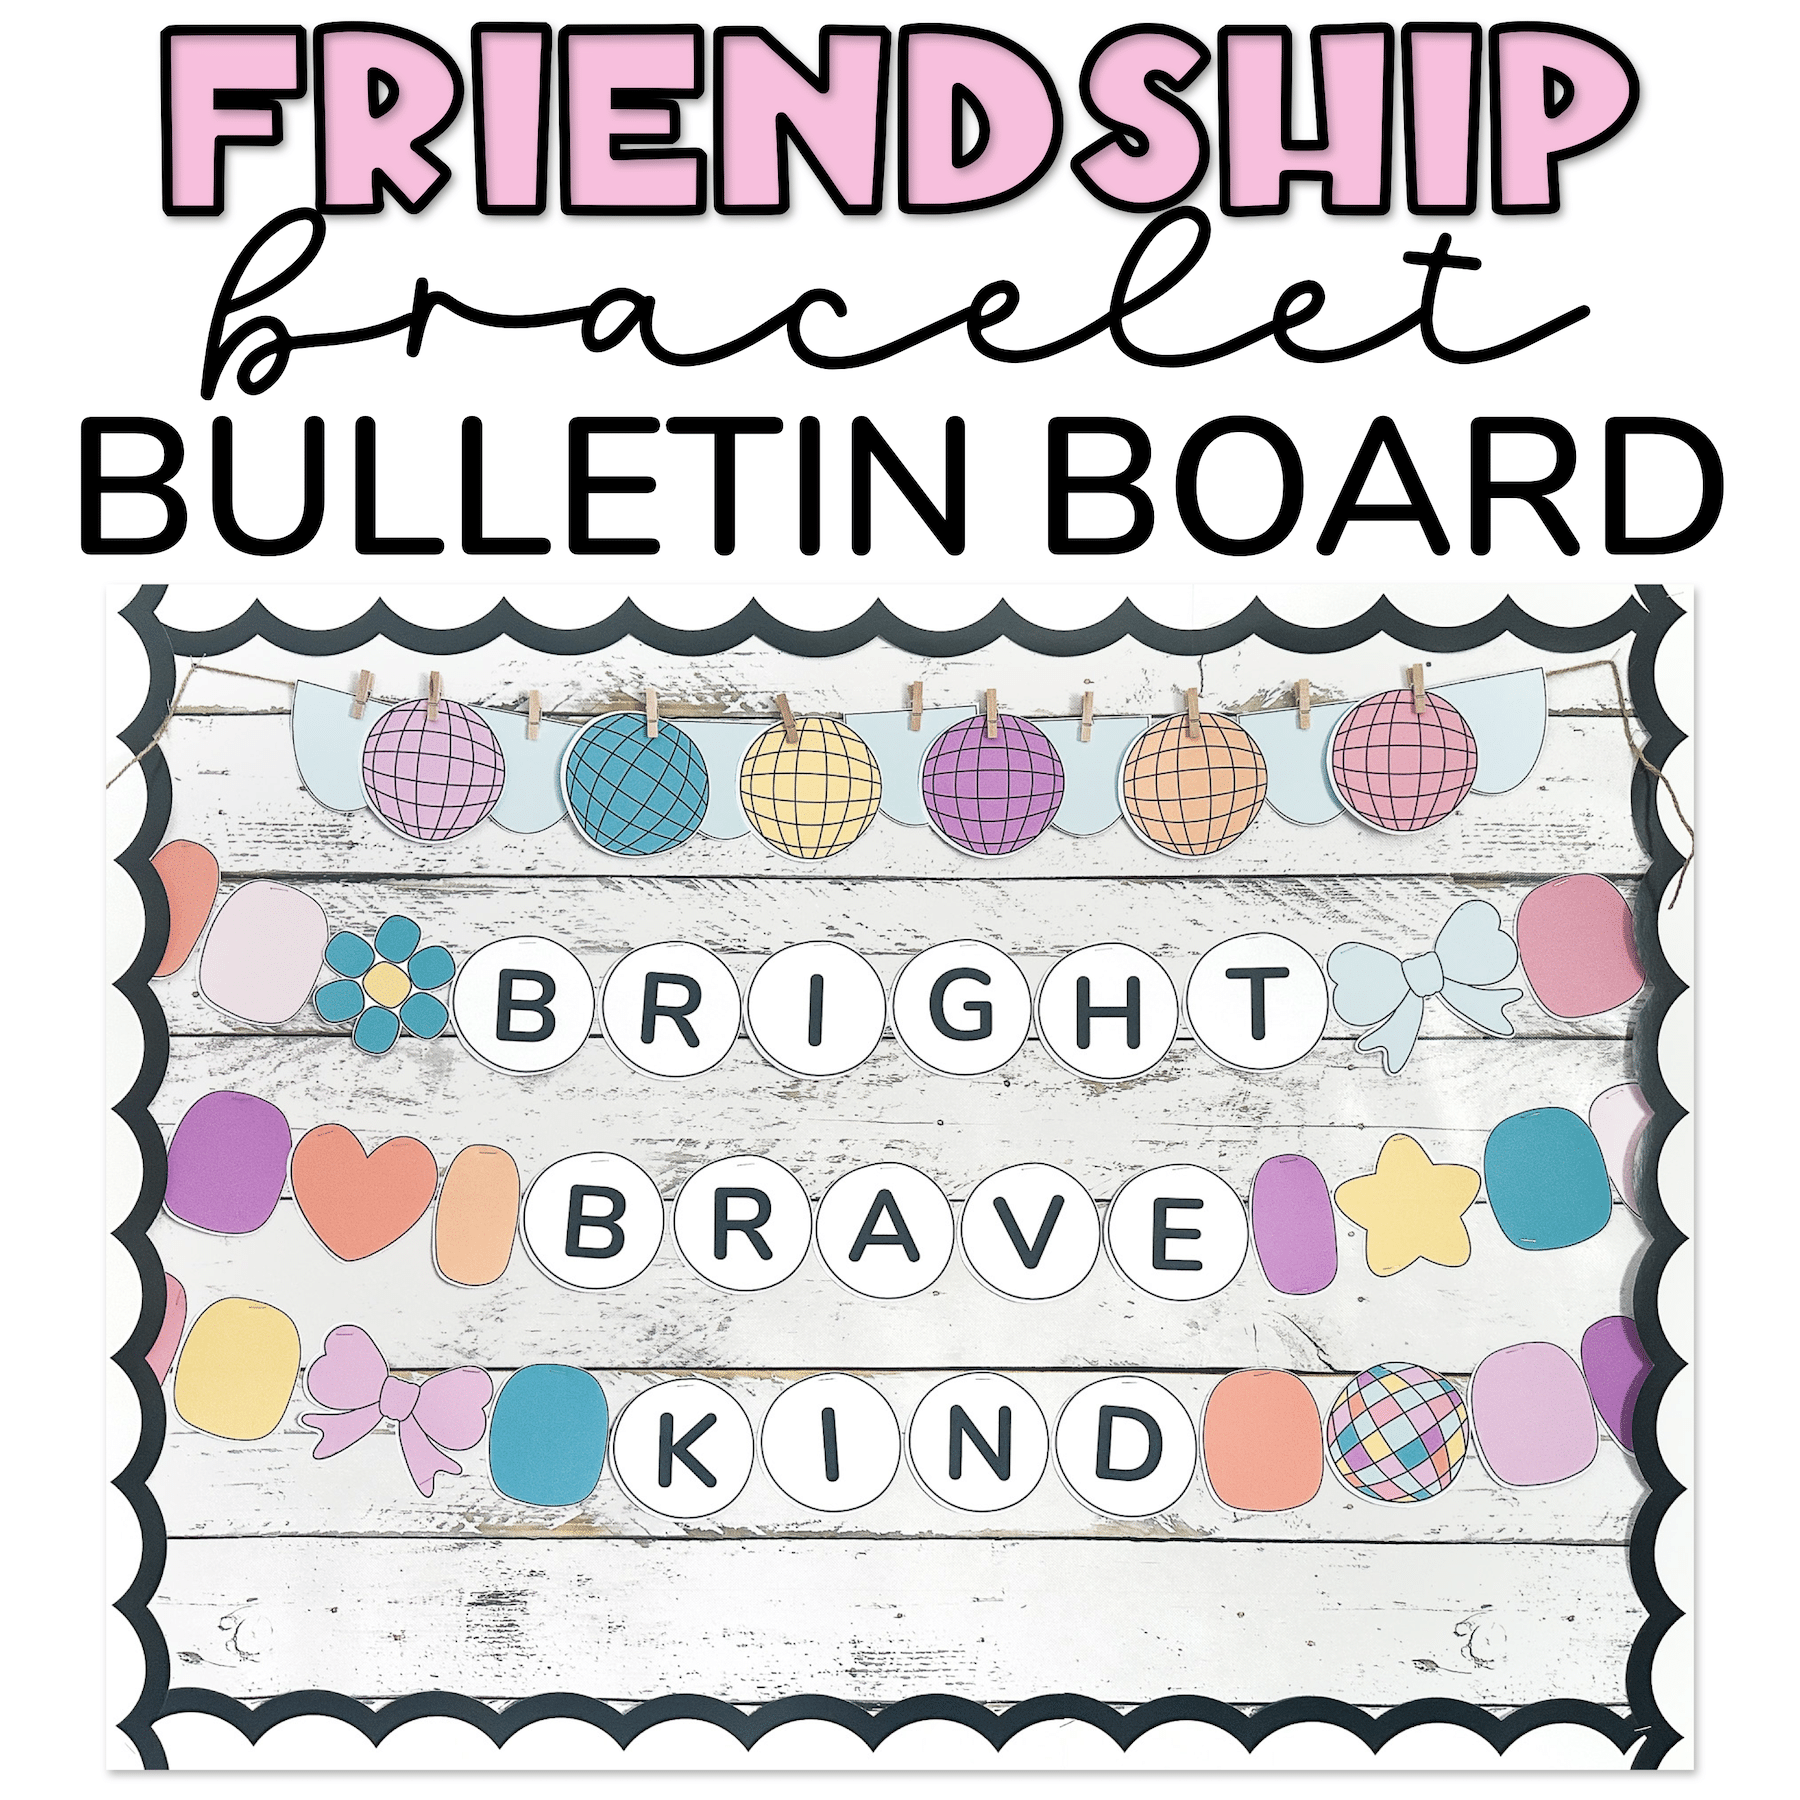 Product cover of friendship bracelet bulletin board